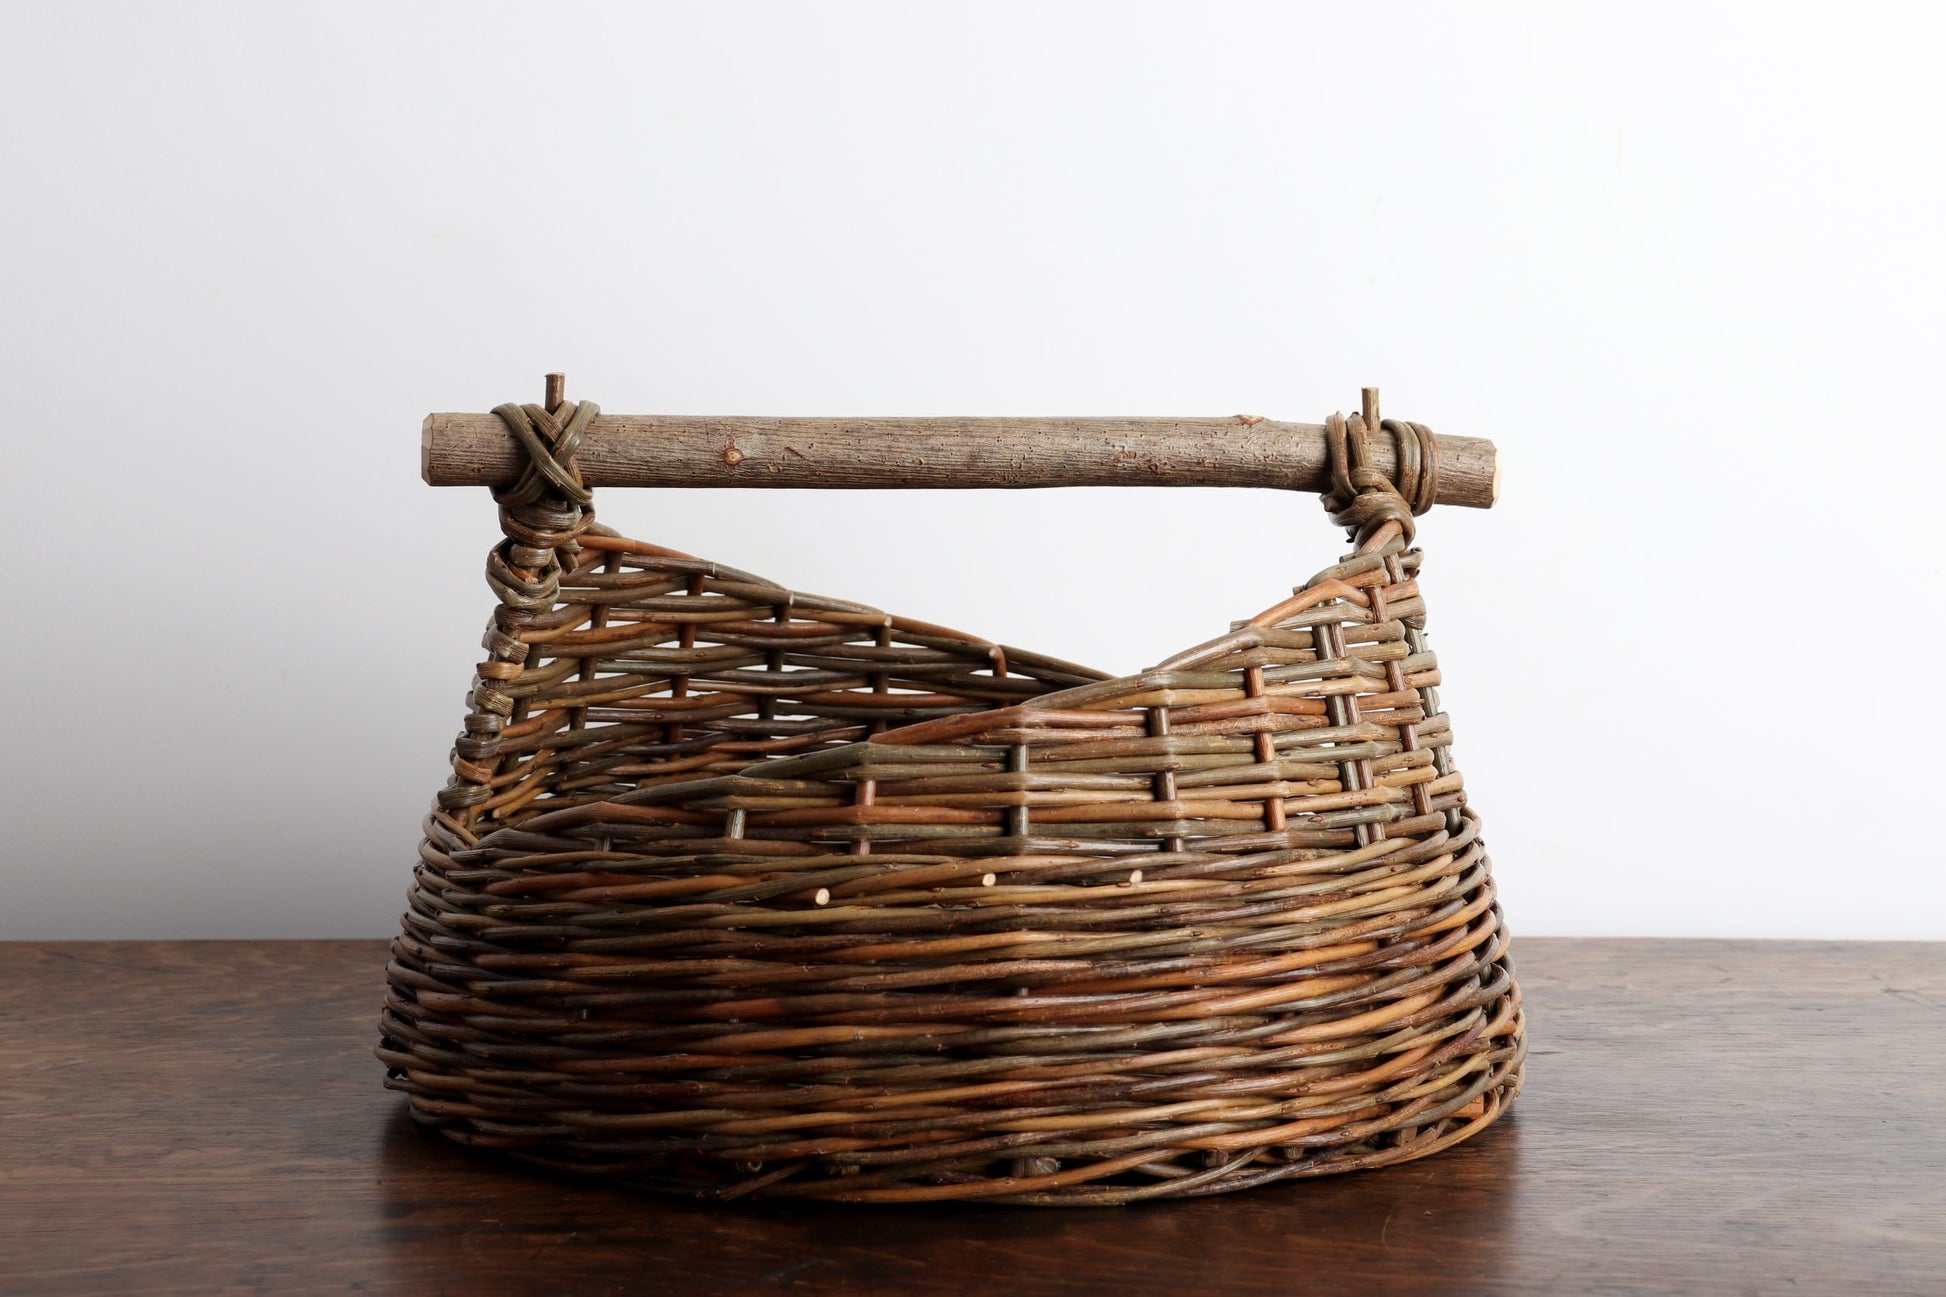 Ofett Basket Handmade by Hopewood Baskets - The Bristol Artisan Handmade Sustainable Gifts and Homewares.